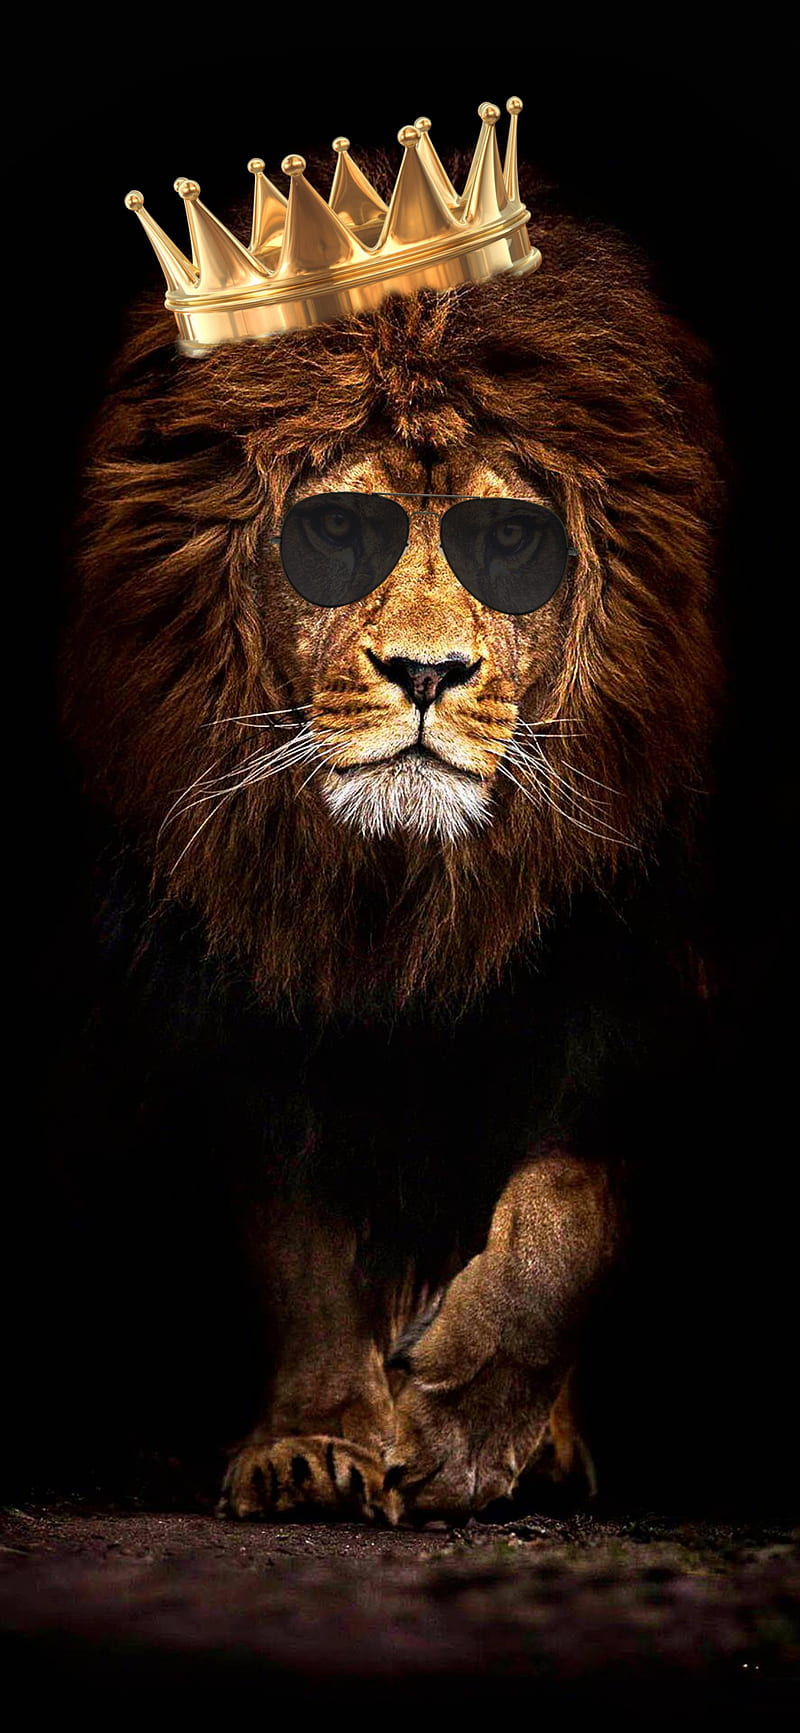 750 Lion King Pictures  Download Free Images on Unsplash